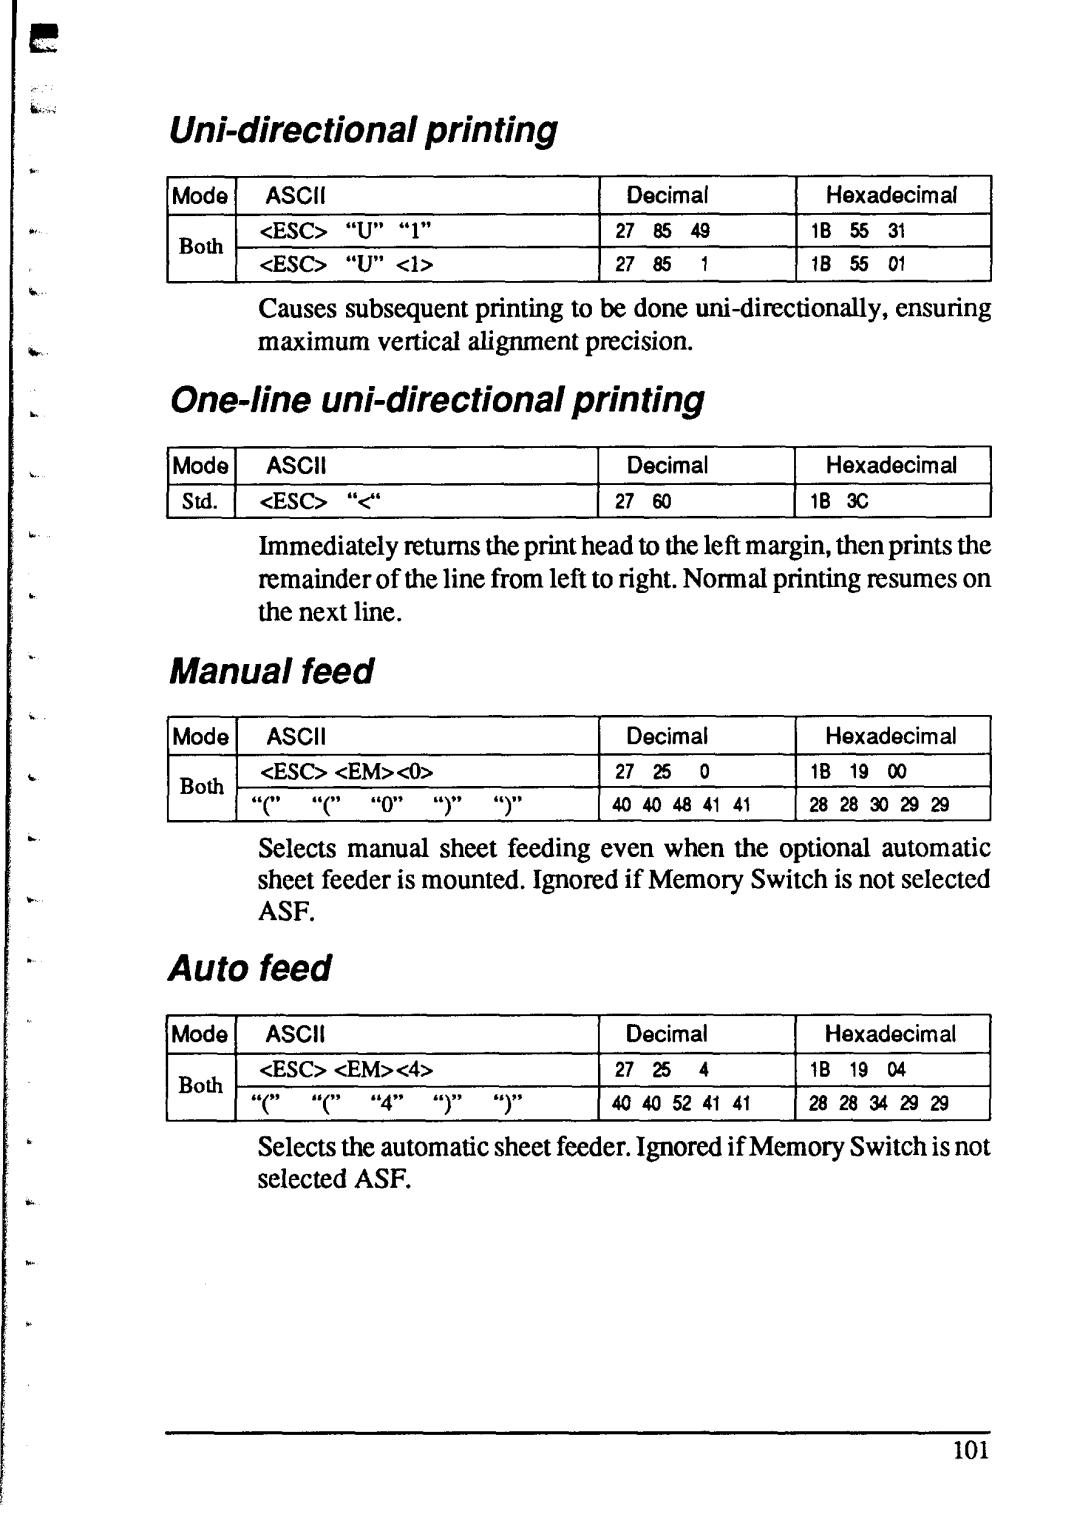 Star Micronics XR-1520, XR-1020 manual Uni-directional printing, One-line w&directional printing, Manual feed, Auto feed 